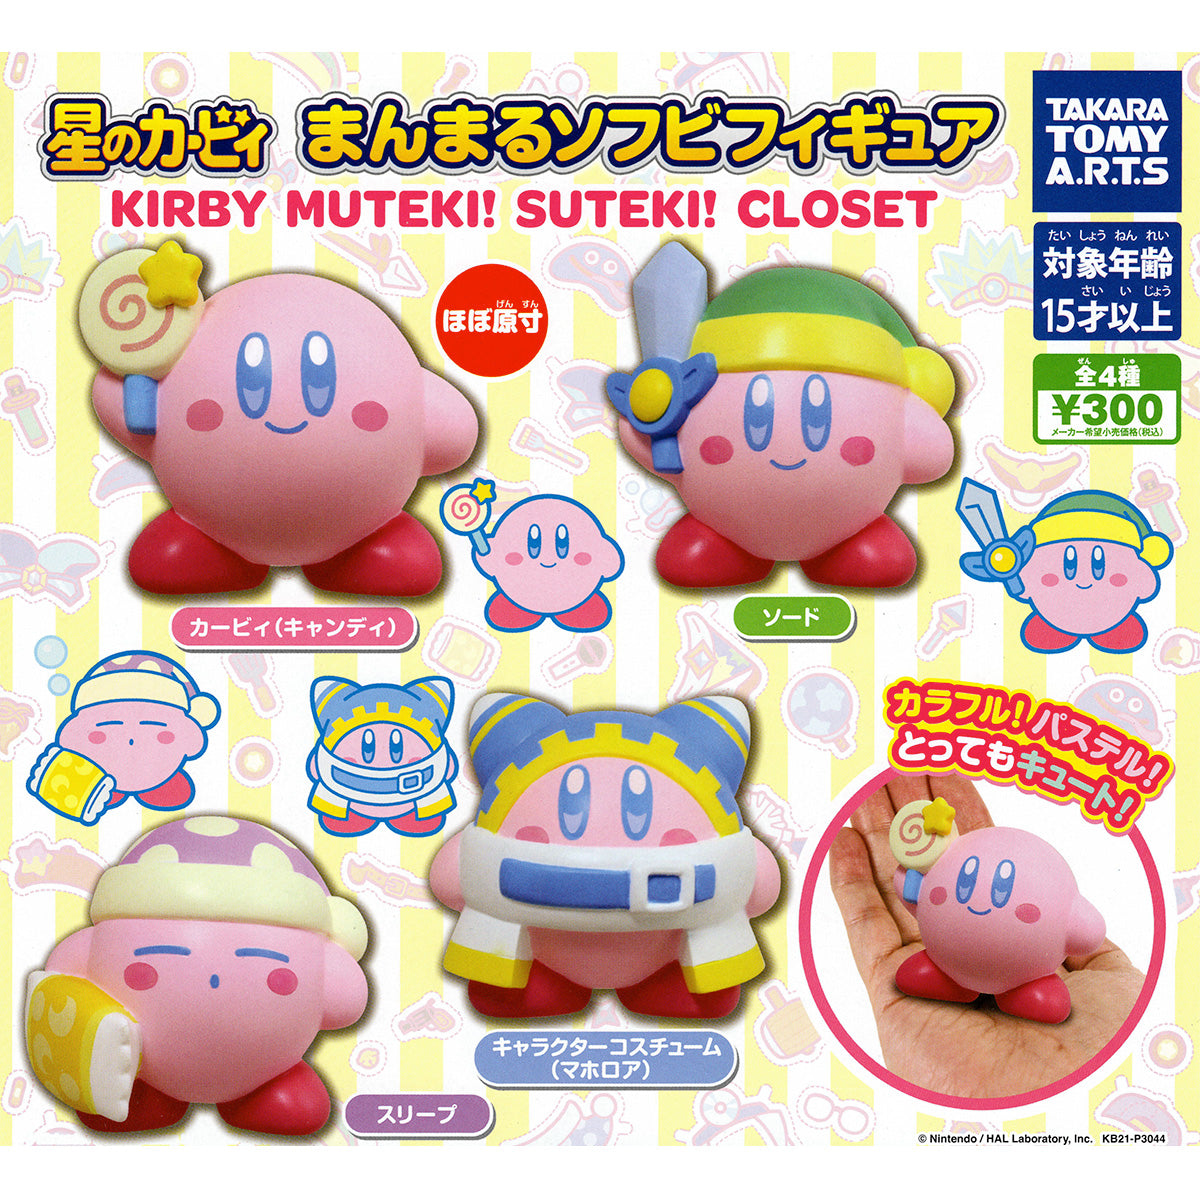 SLEEPY KIRBY - KIRBY Suteki! Muteki! Closet Collection LARGE GASHAPON (NEW)